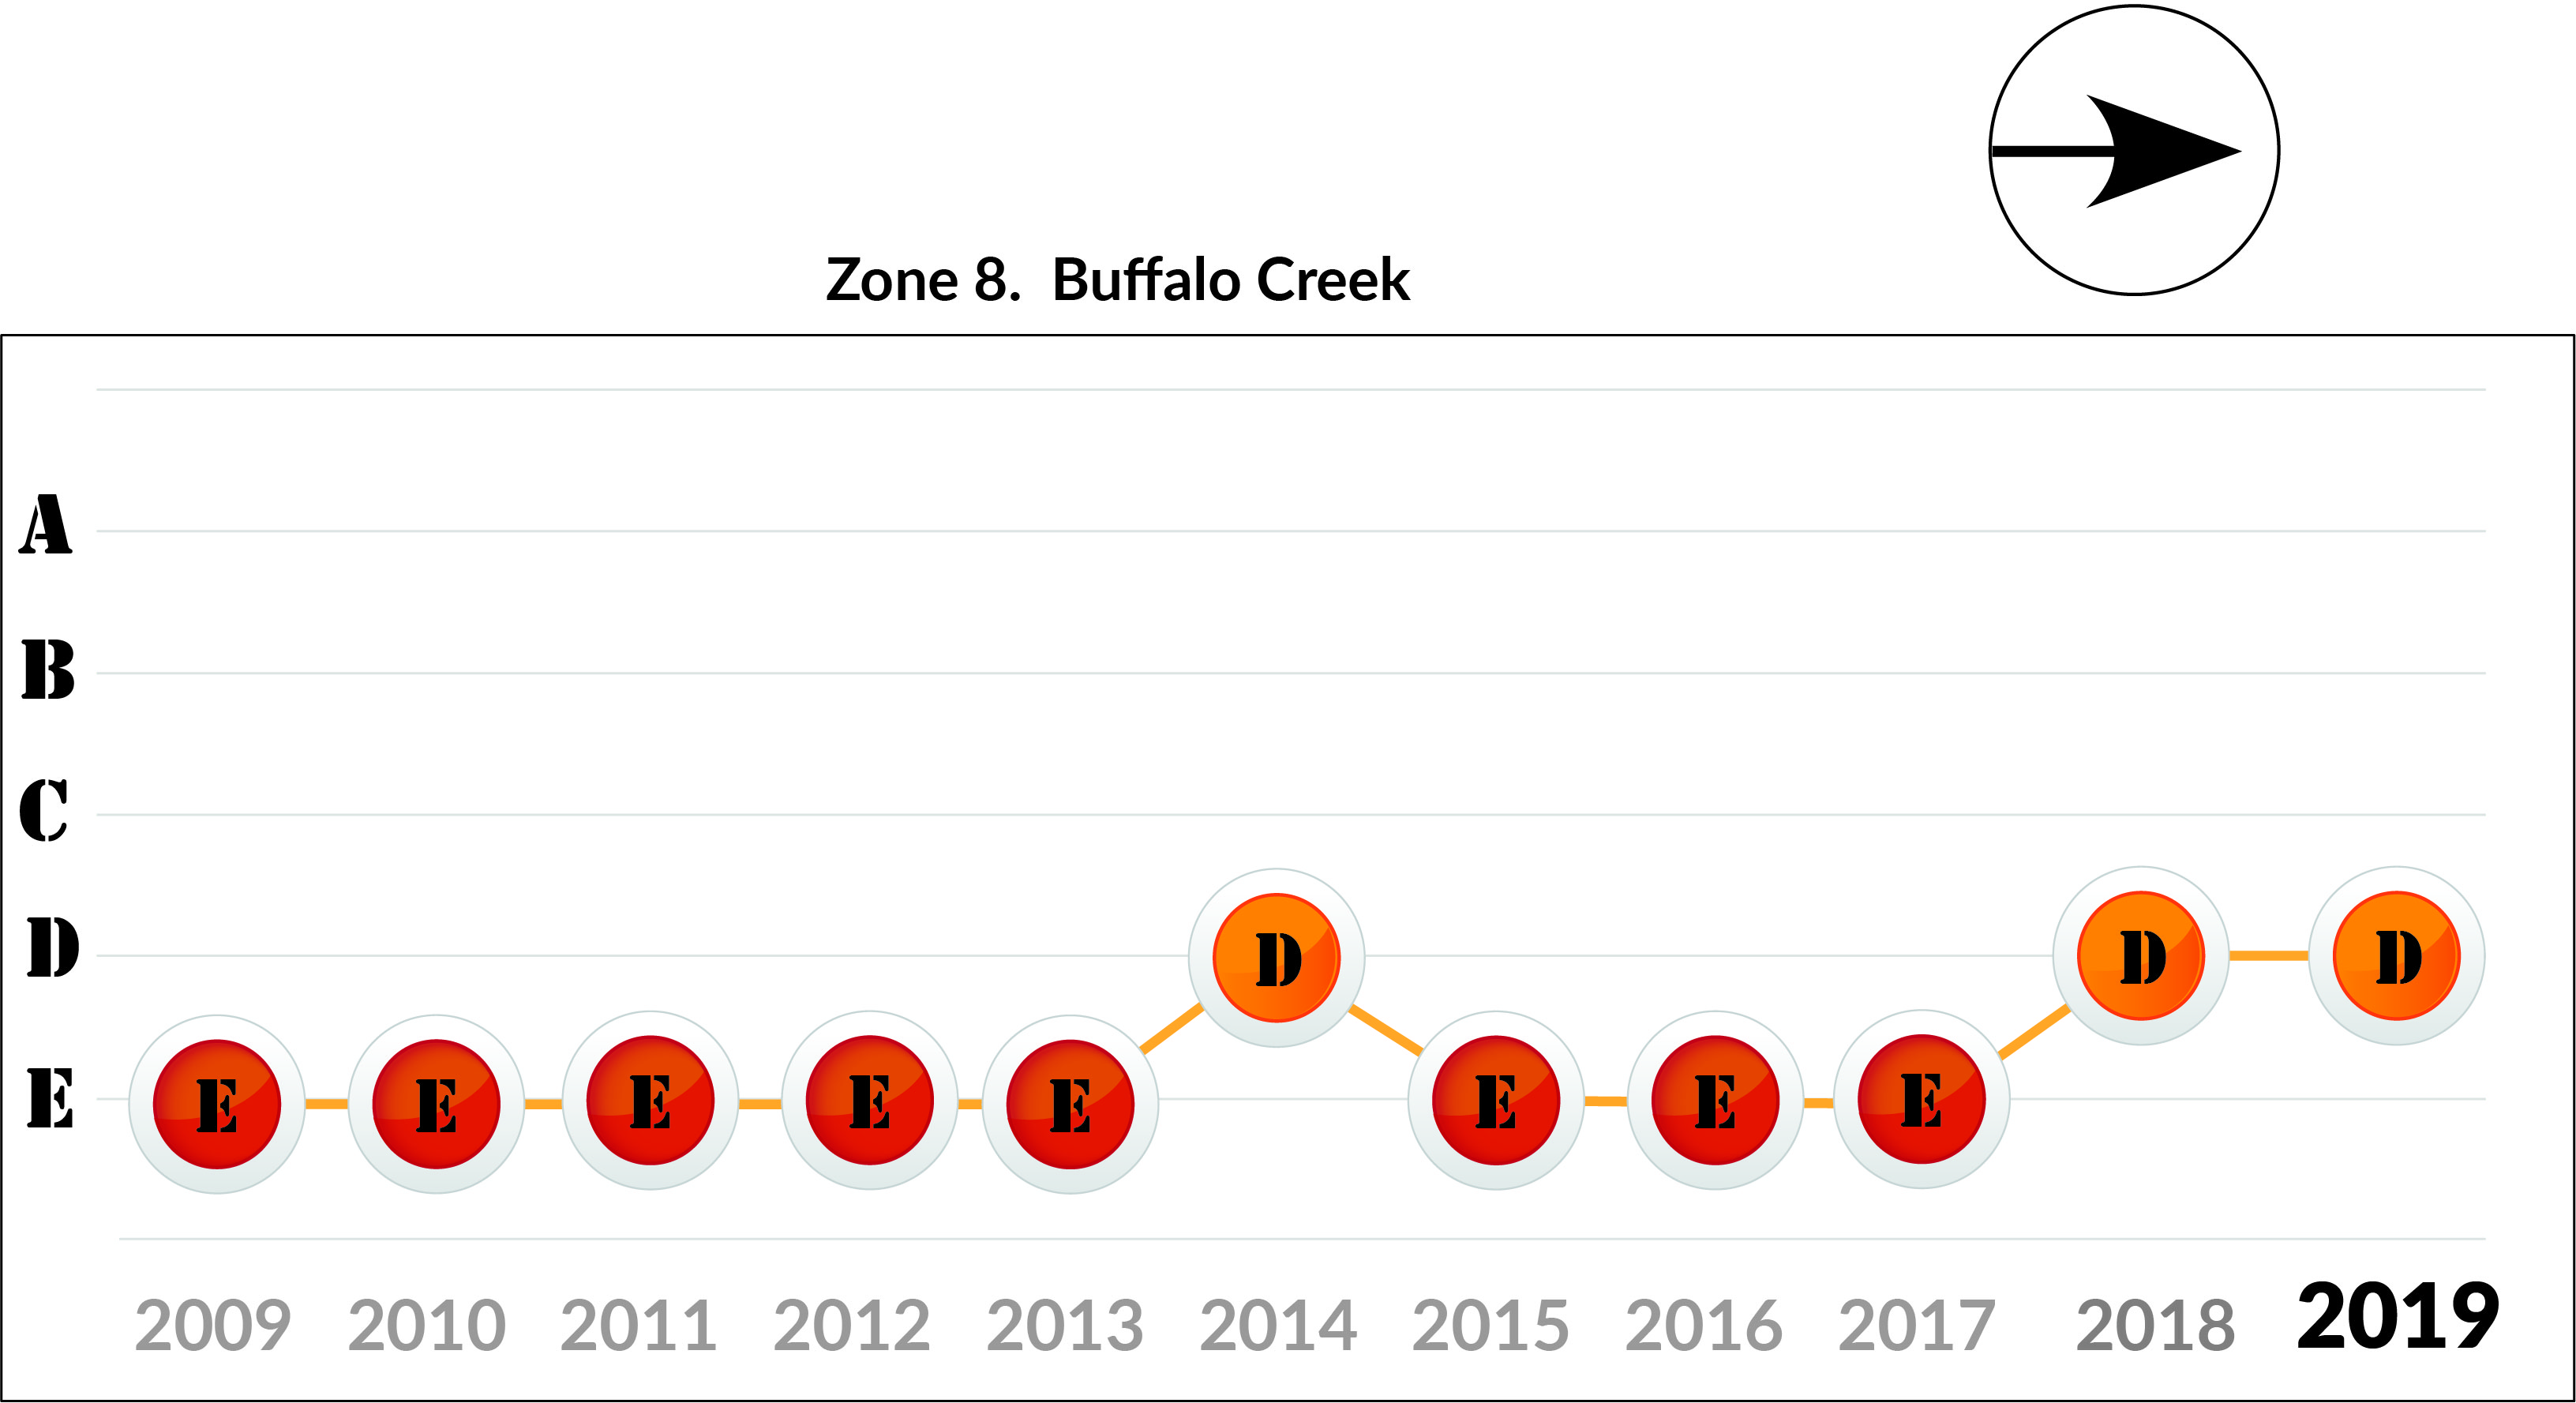 Zone 8 Buffalo Creek trends